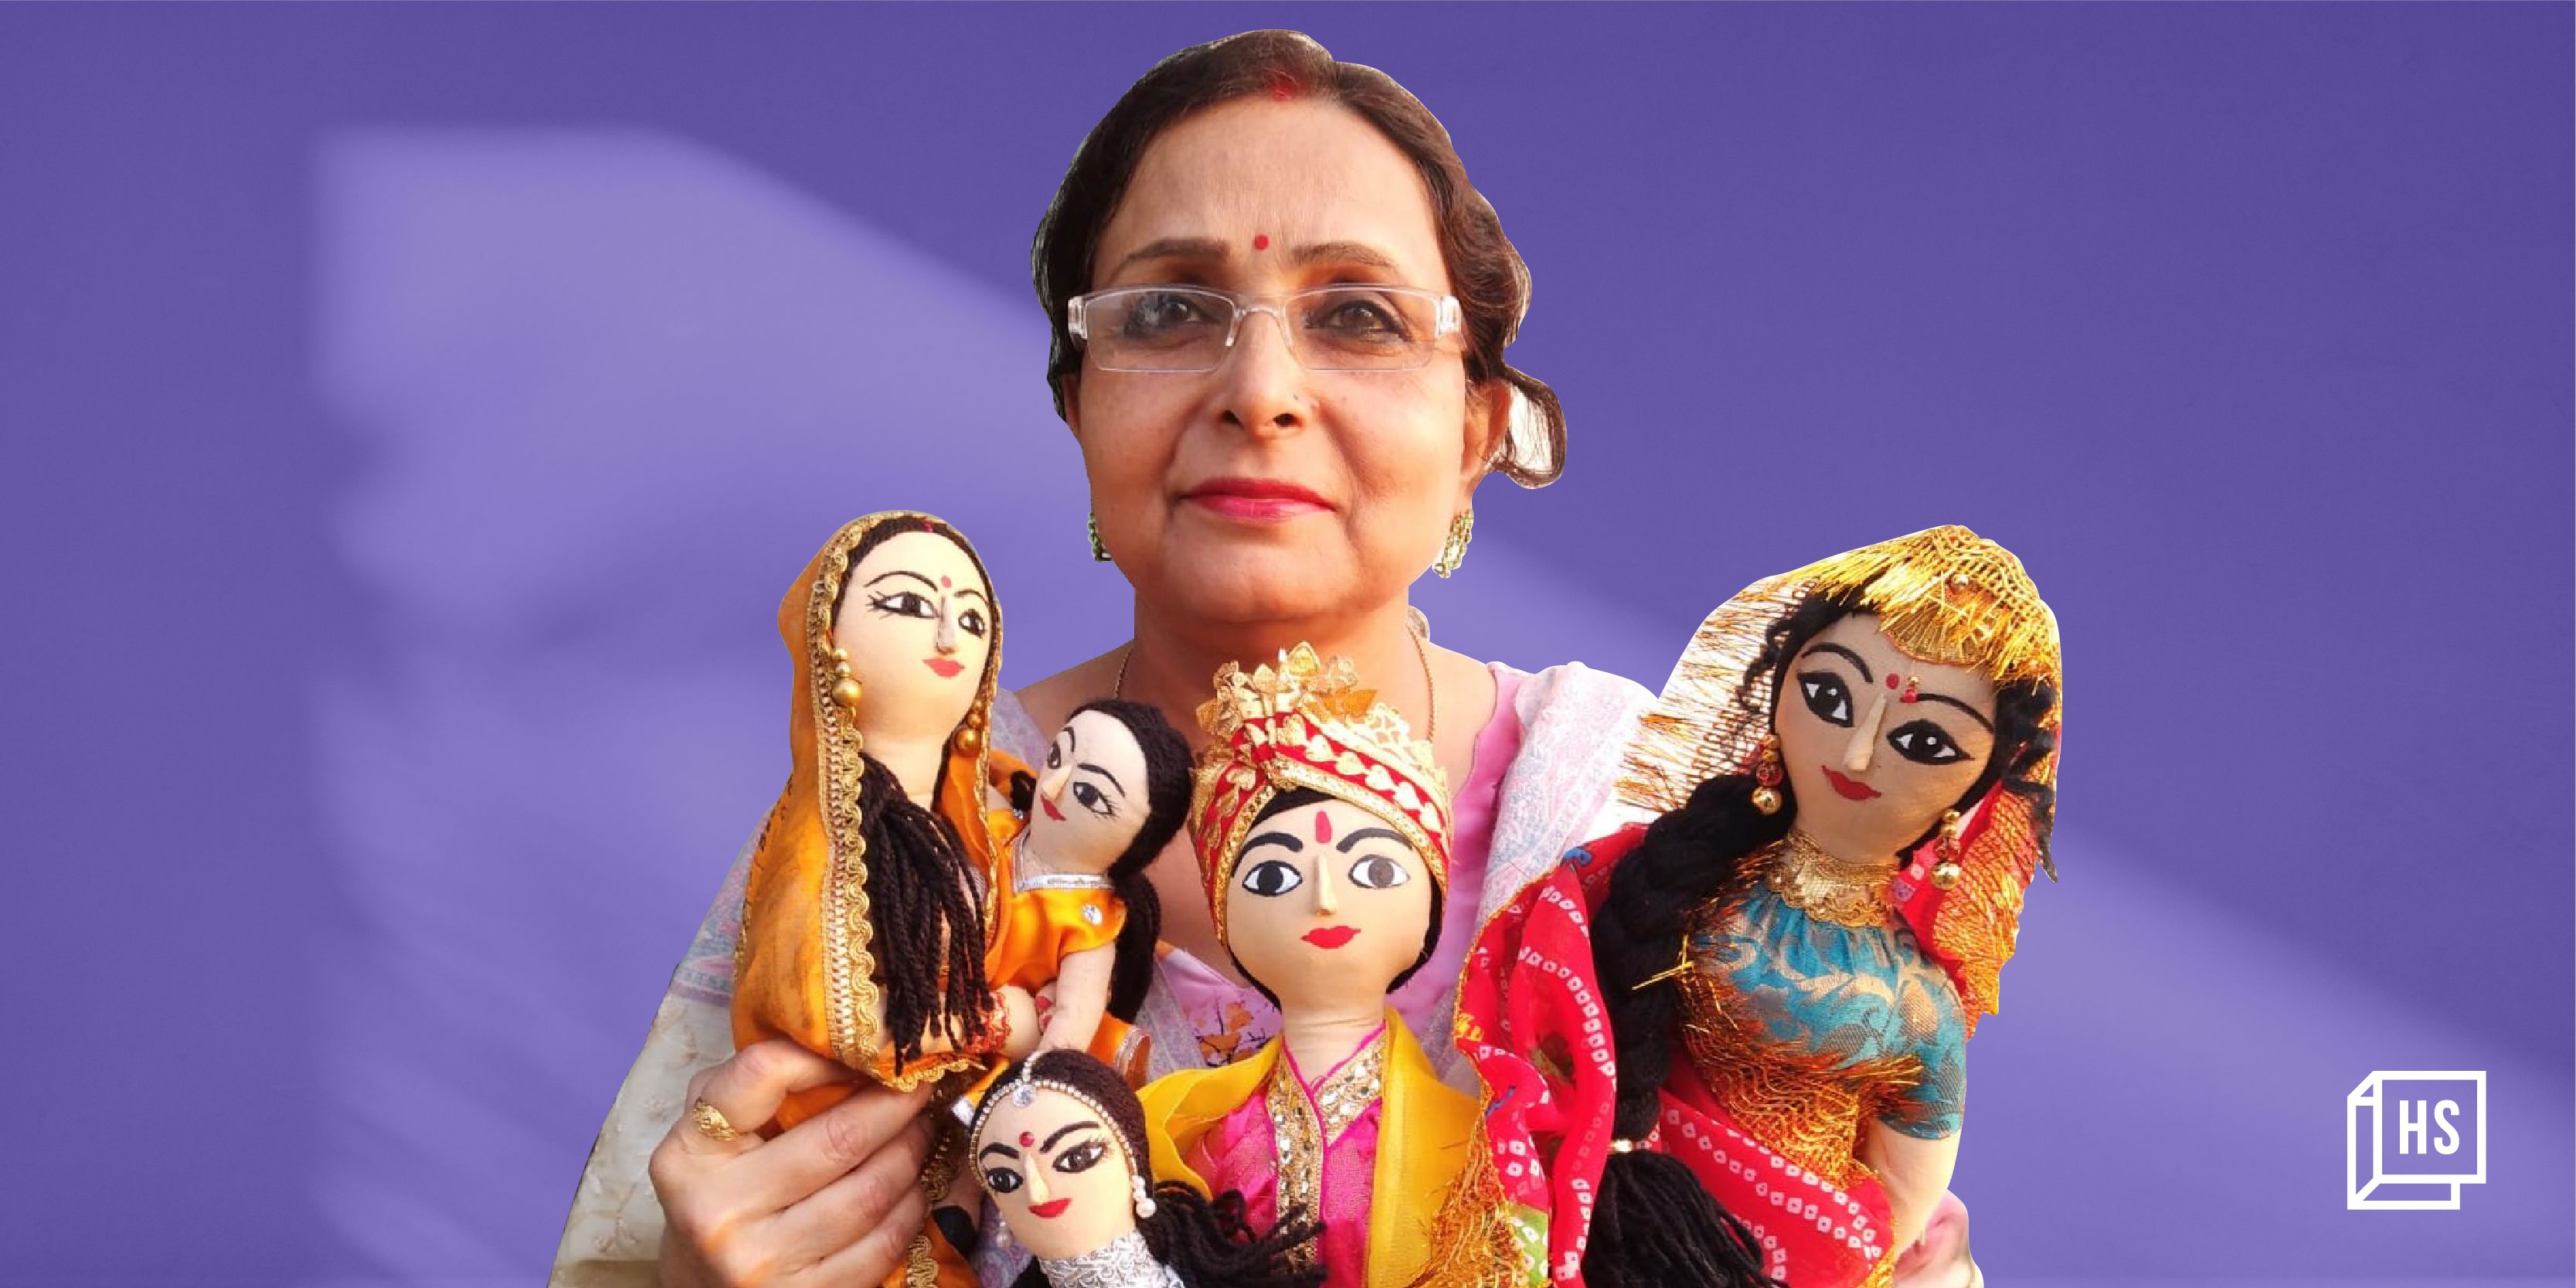 Namita Azad is giving Bihar’s beautiful Kanyaputri doll tradition a new lease of life 

